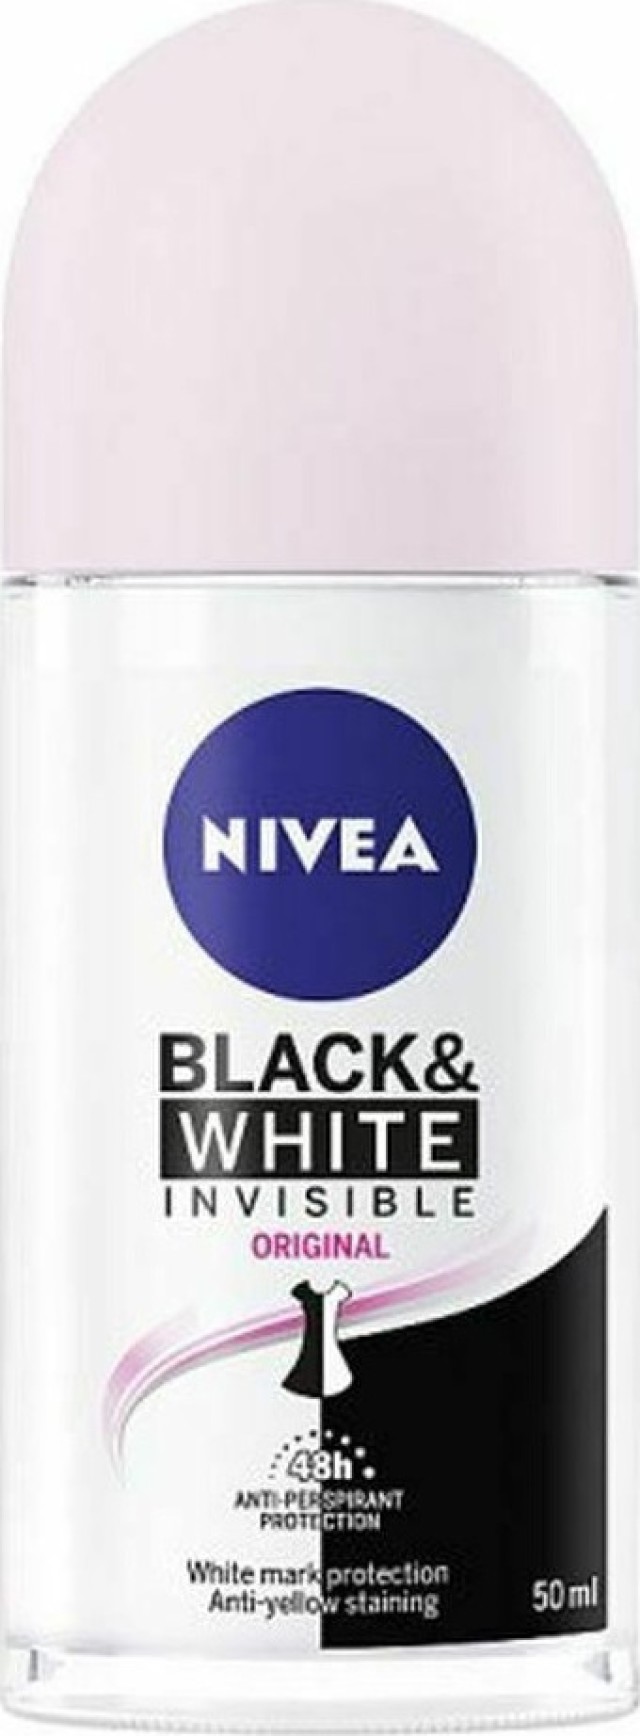 Nivea Black & White Invisible Original Γυναικείο Αποσμητικό Roll-on 48ωρης Προστασίας, 50ml